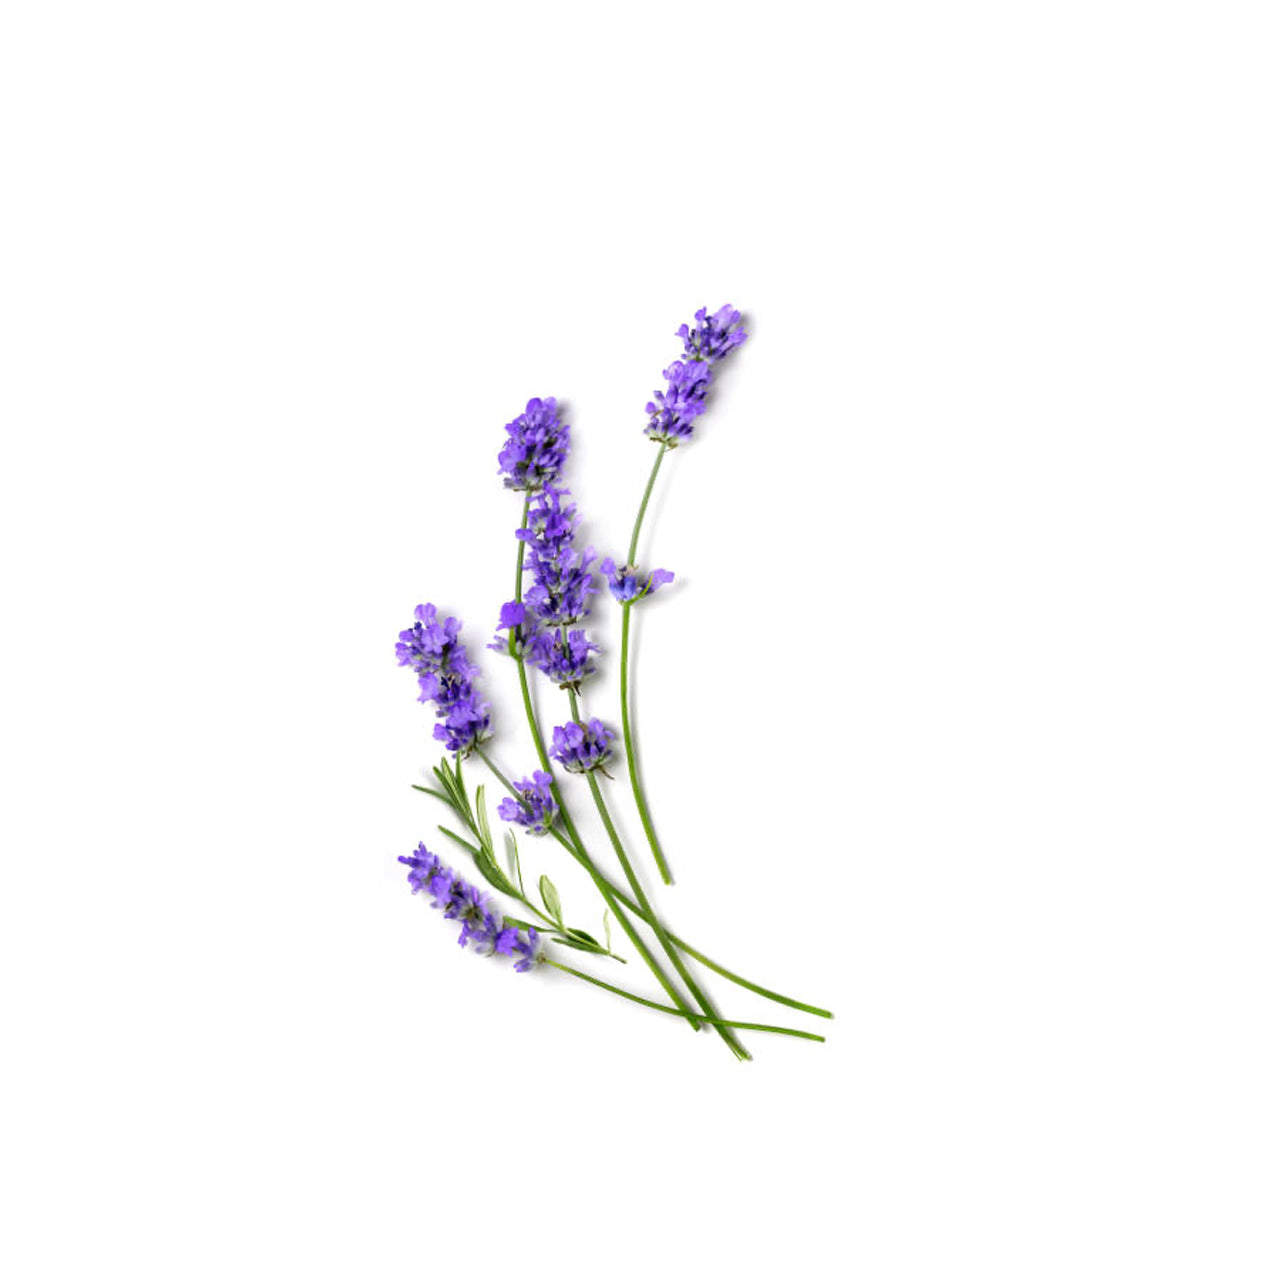 Lavender Essential from France, Region of Barreme